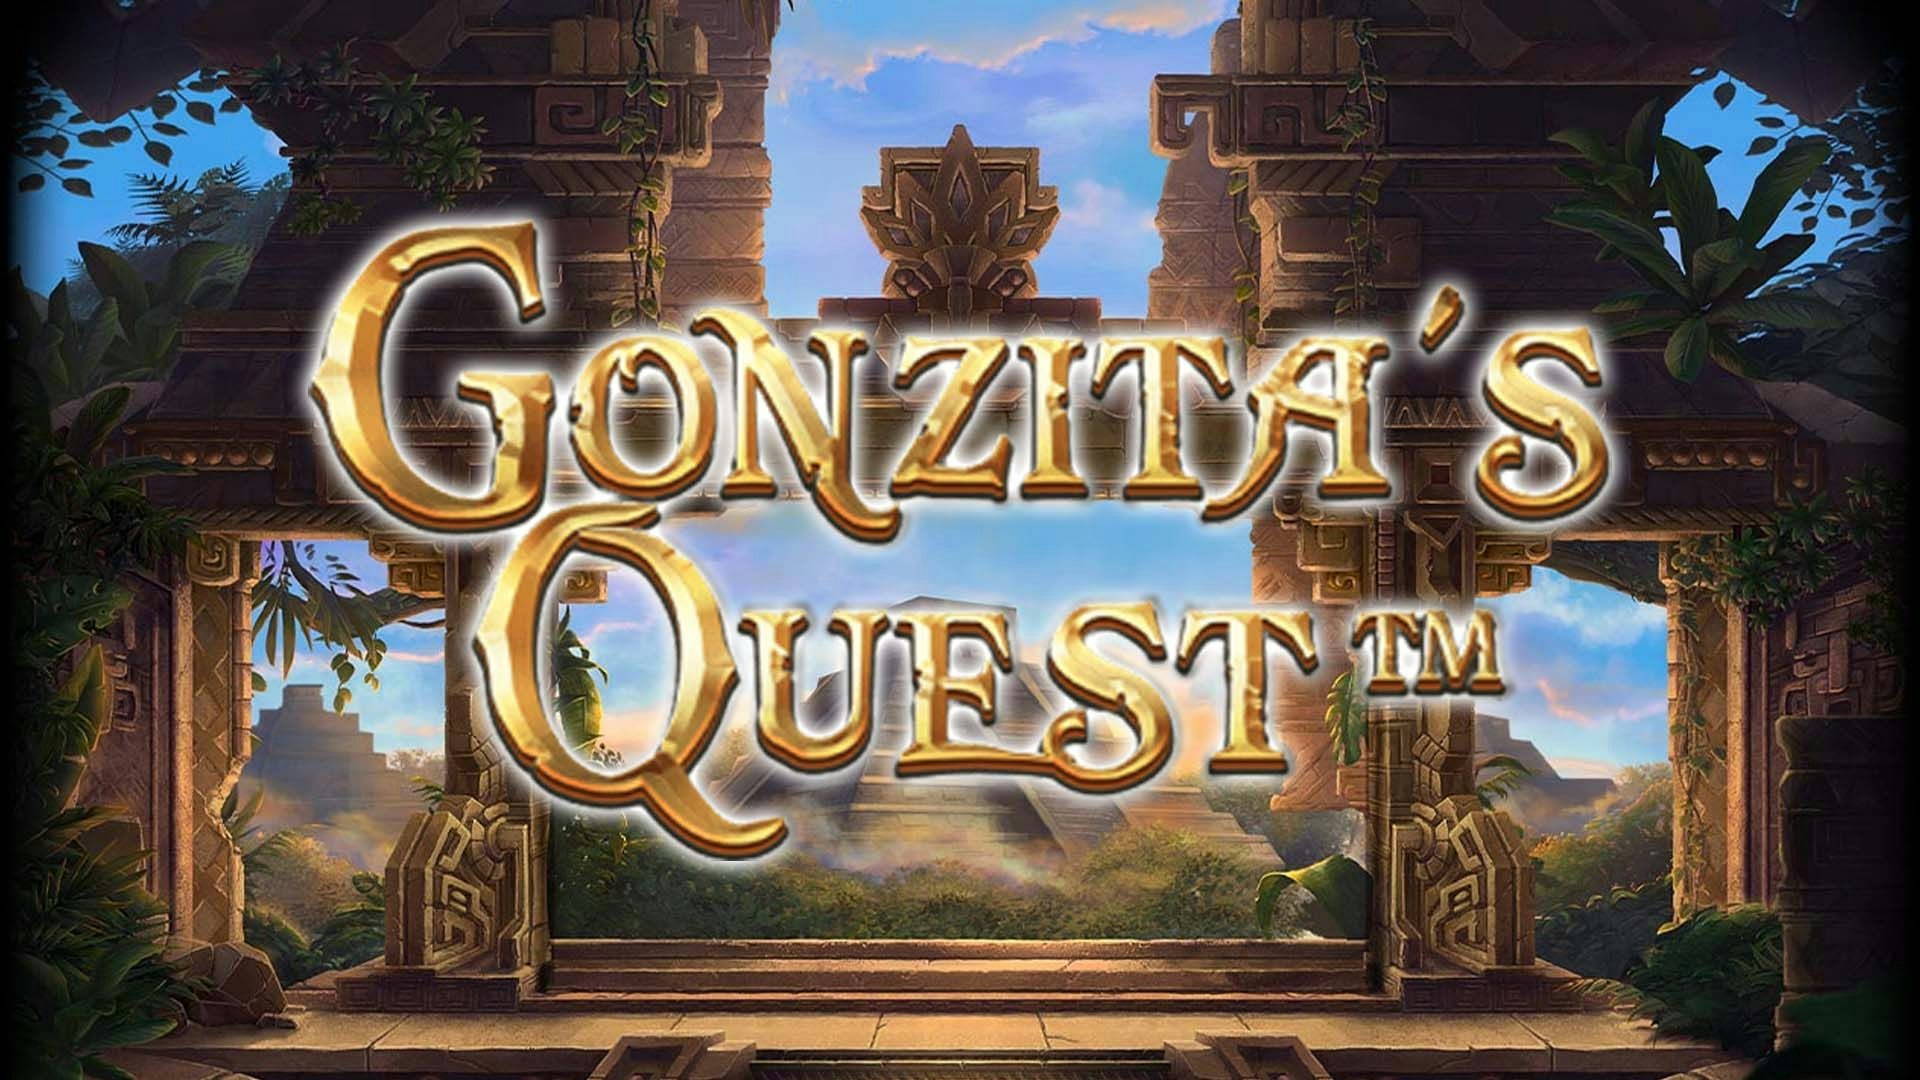 Gonzita's Quest